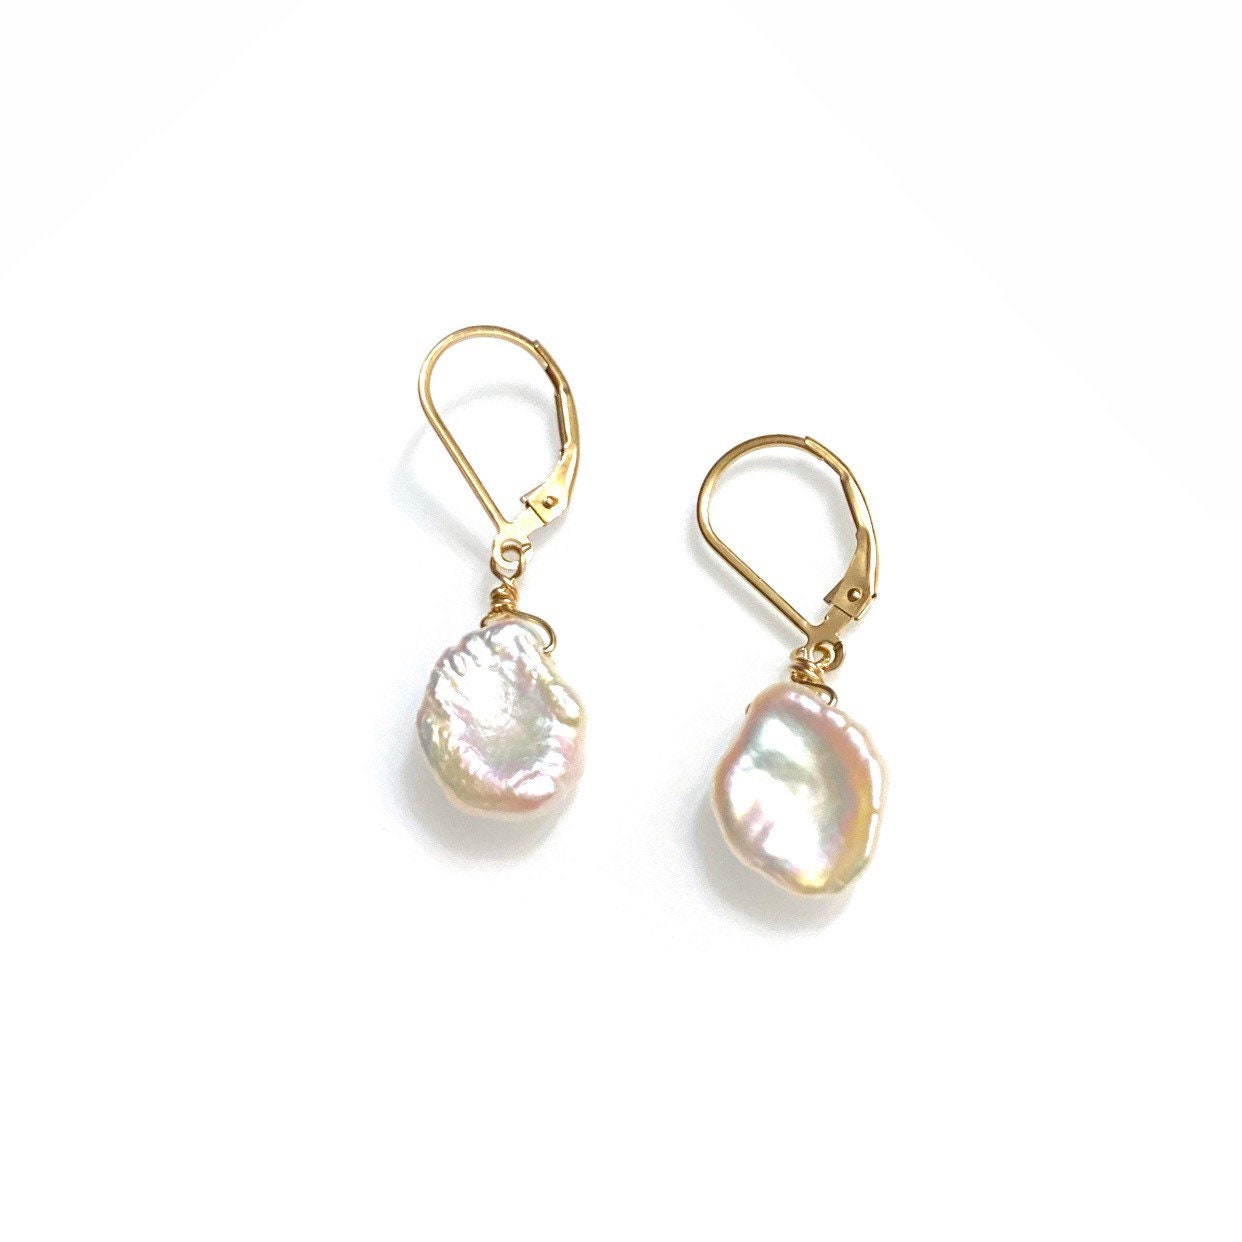 Orecchiette keshi pearl earrings